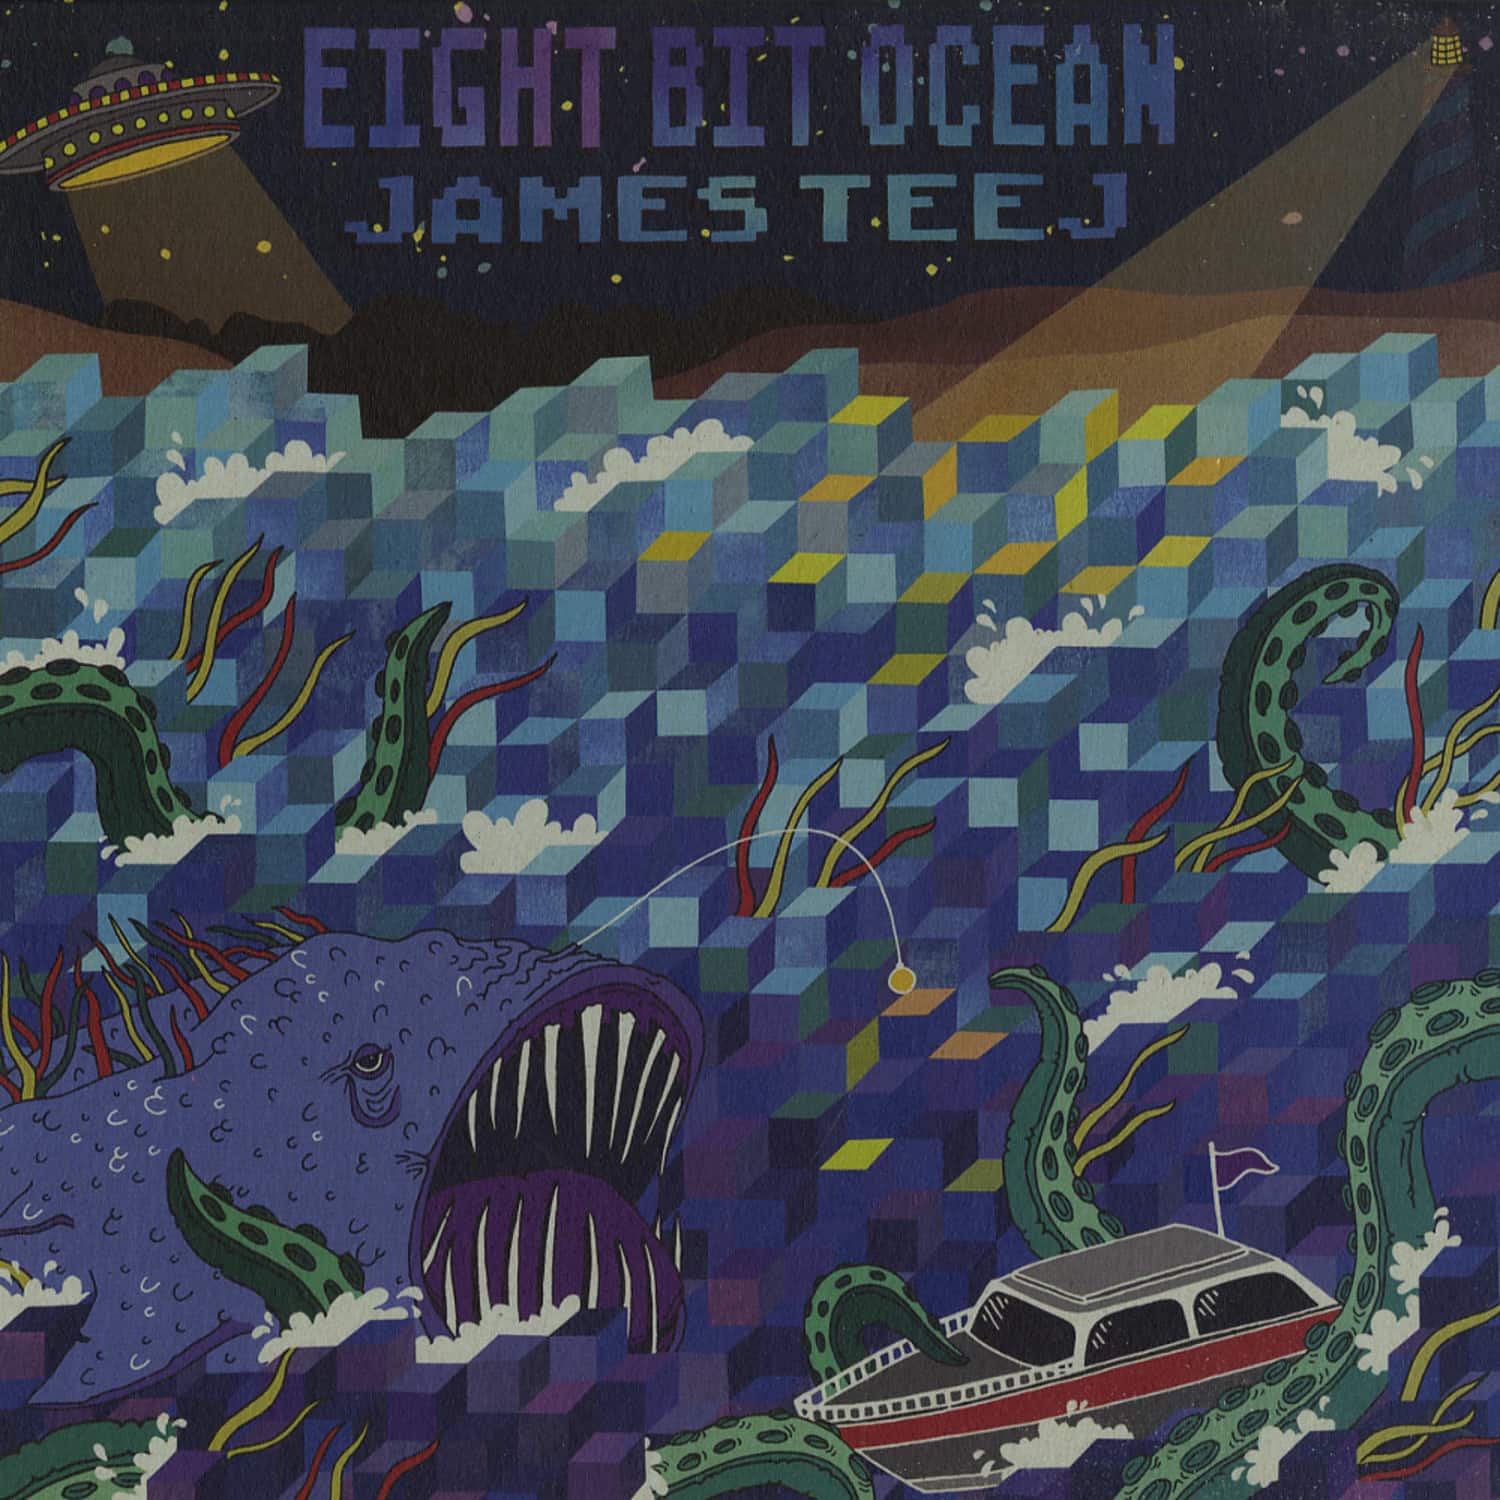 James Teej - EIGHT BIT OCEAN 